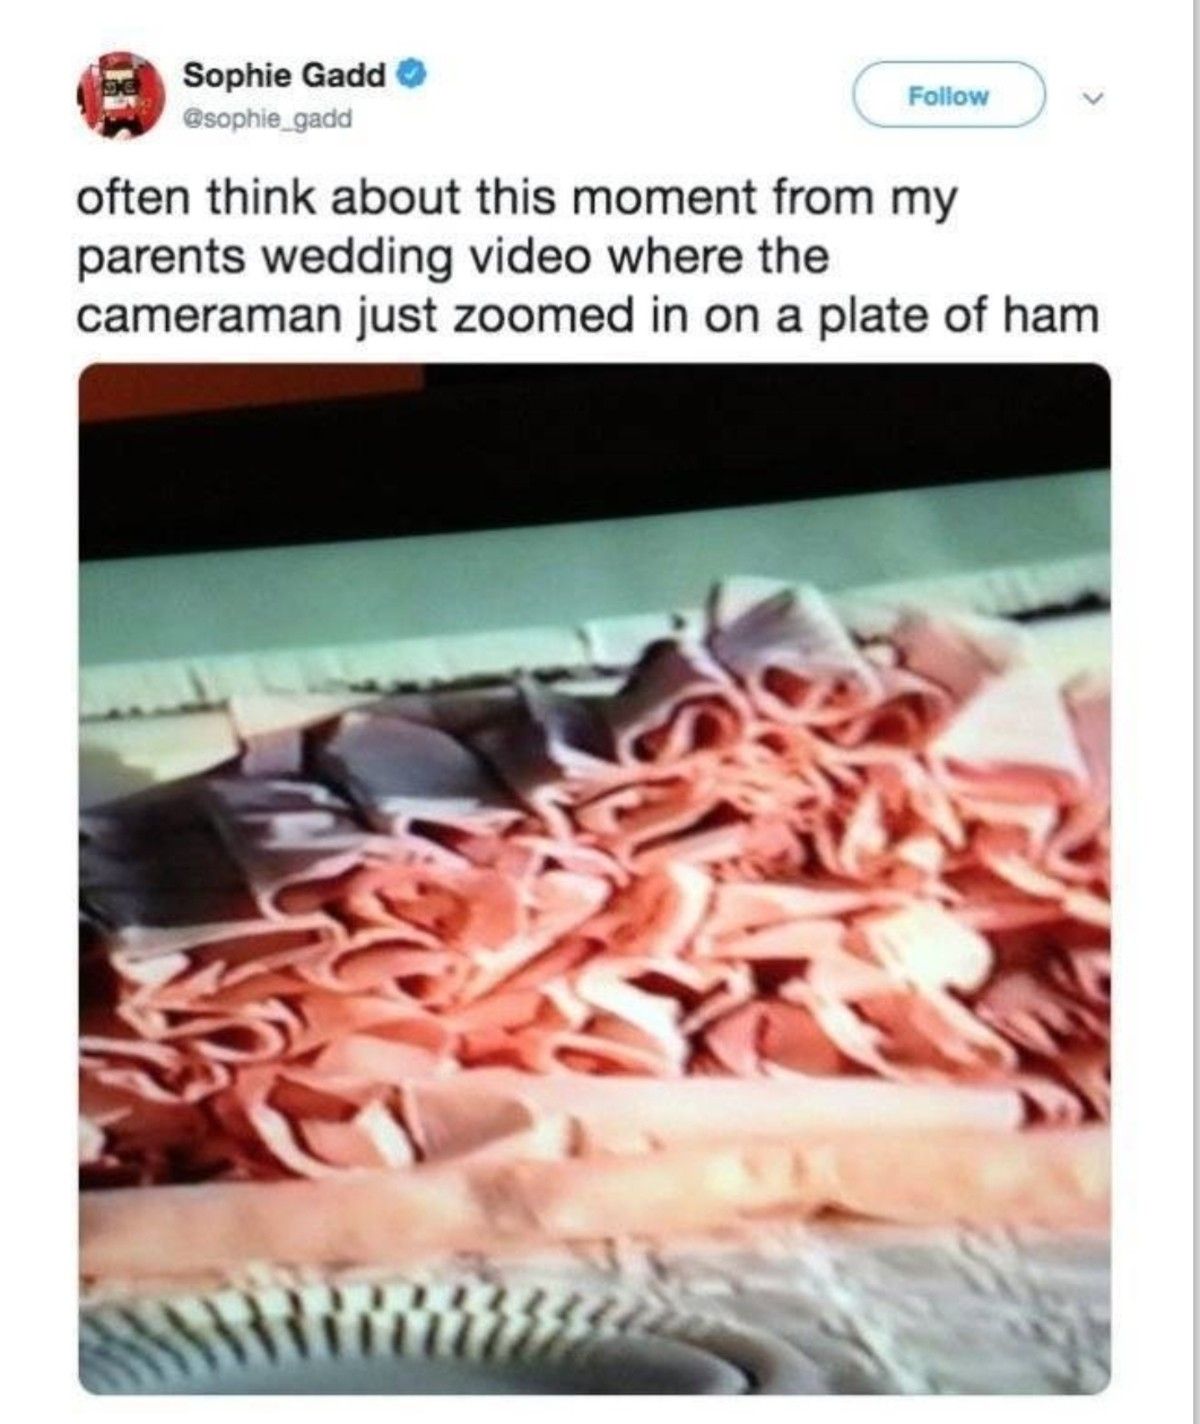 He went full ham